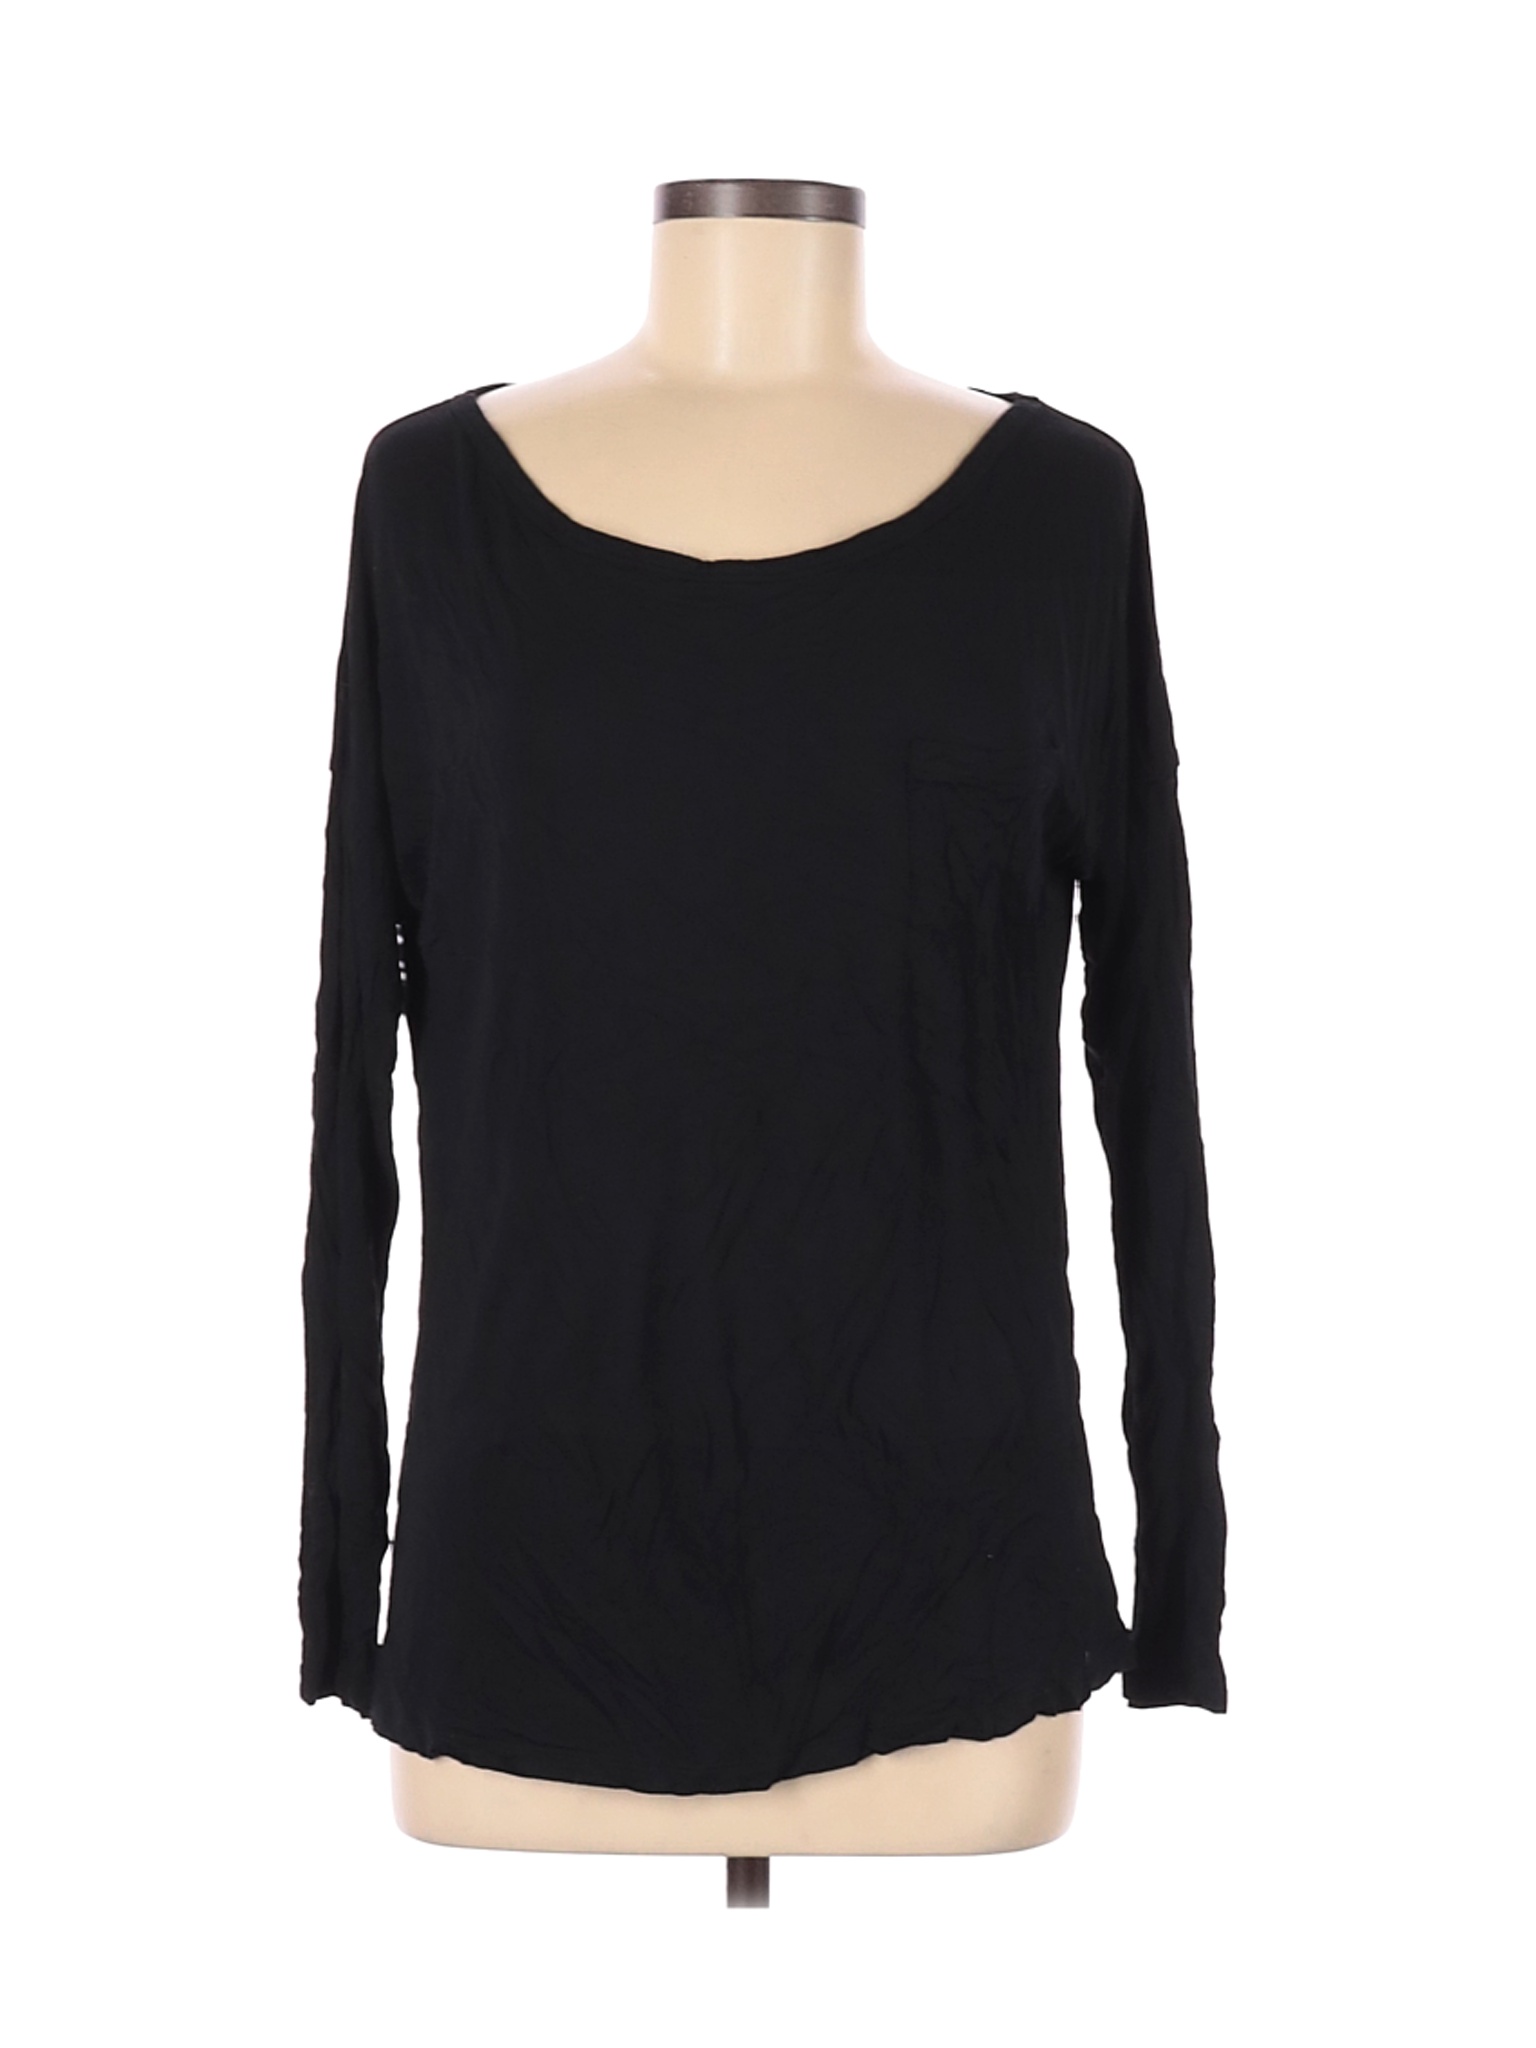 Old Navy Women Black Long Sleeve T-Shirt L | eBay